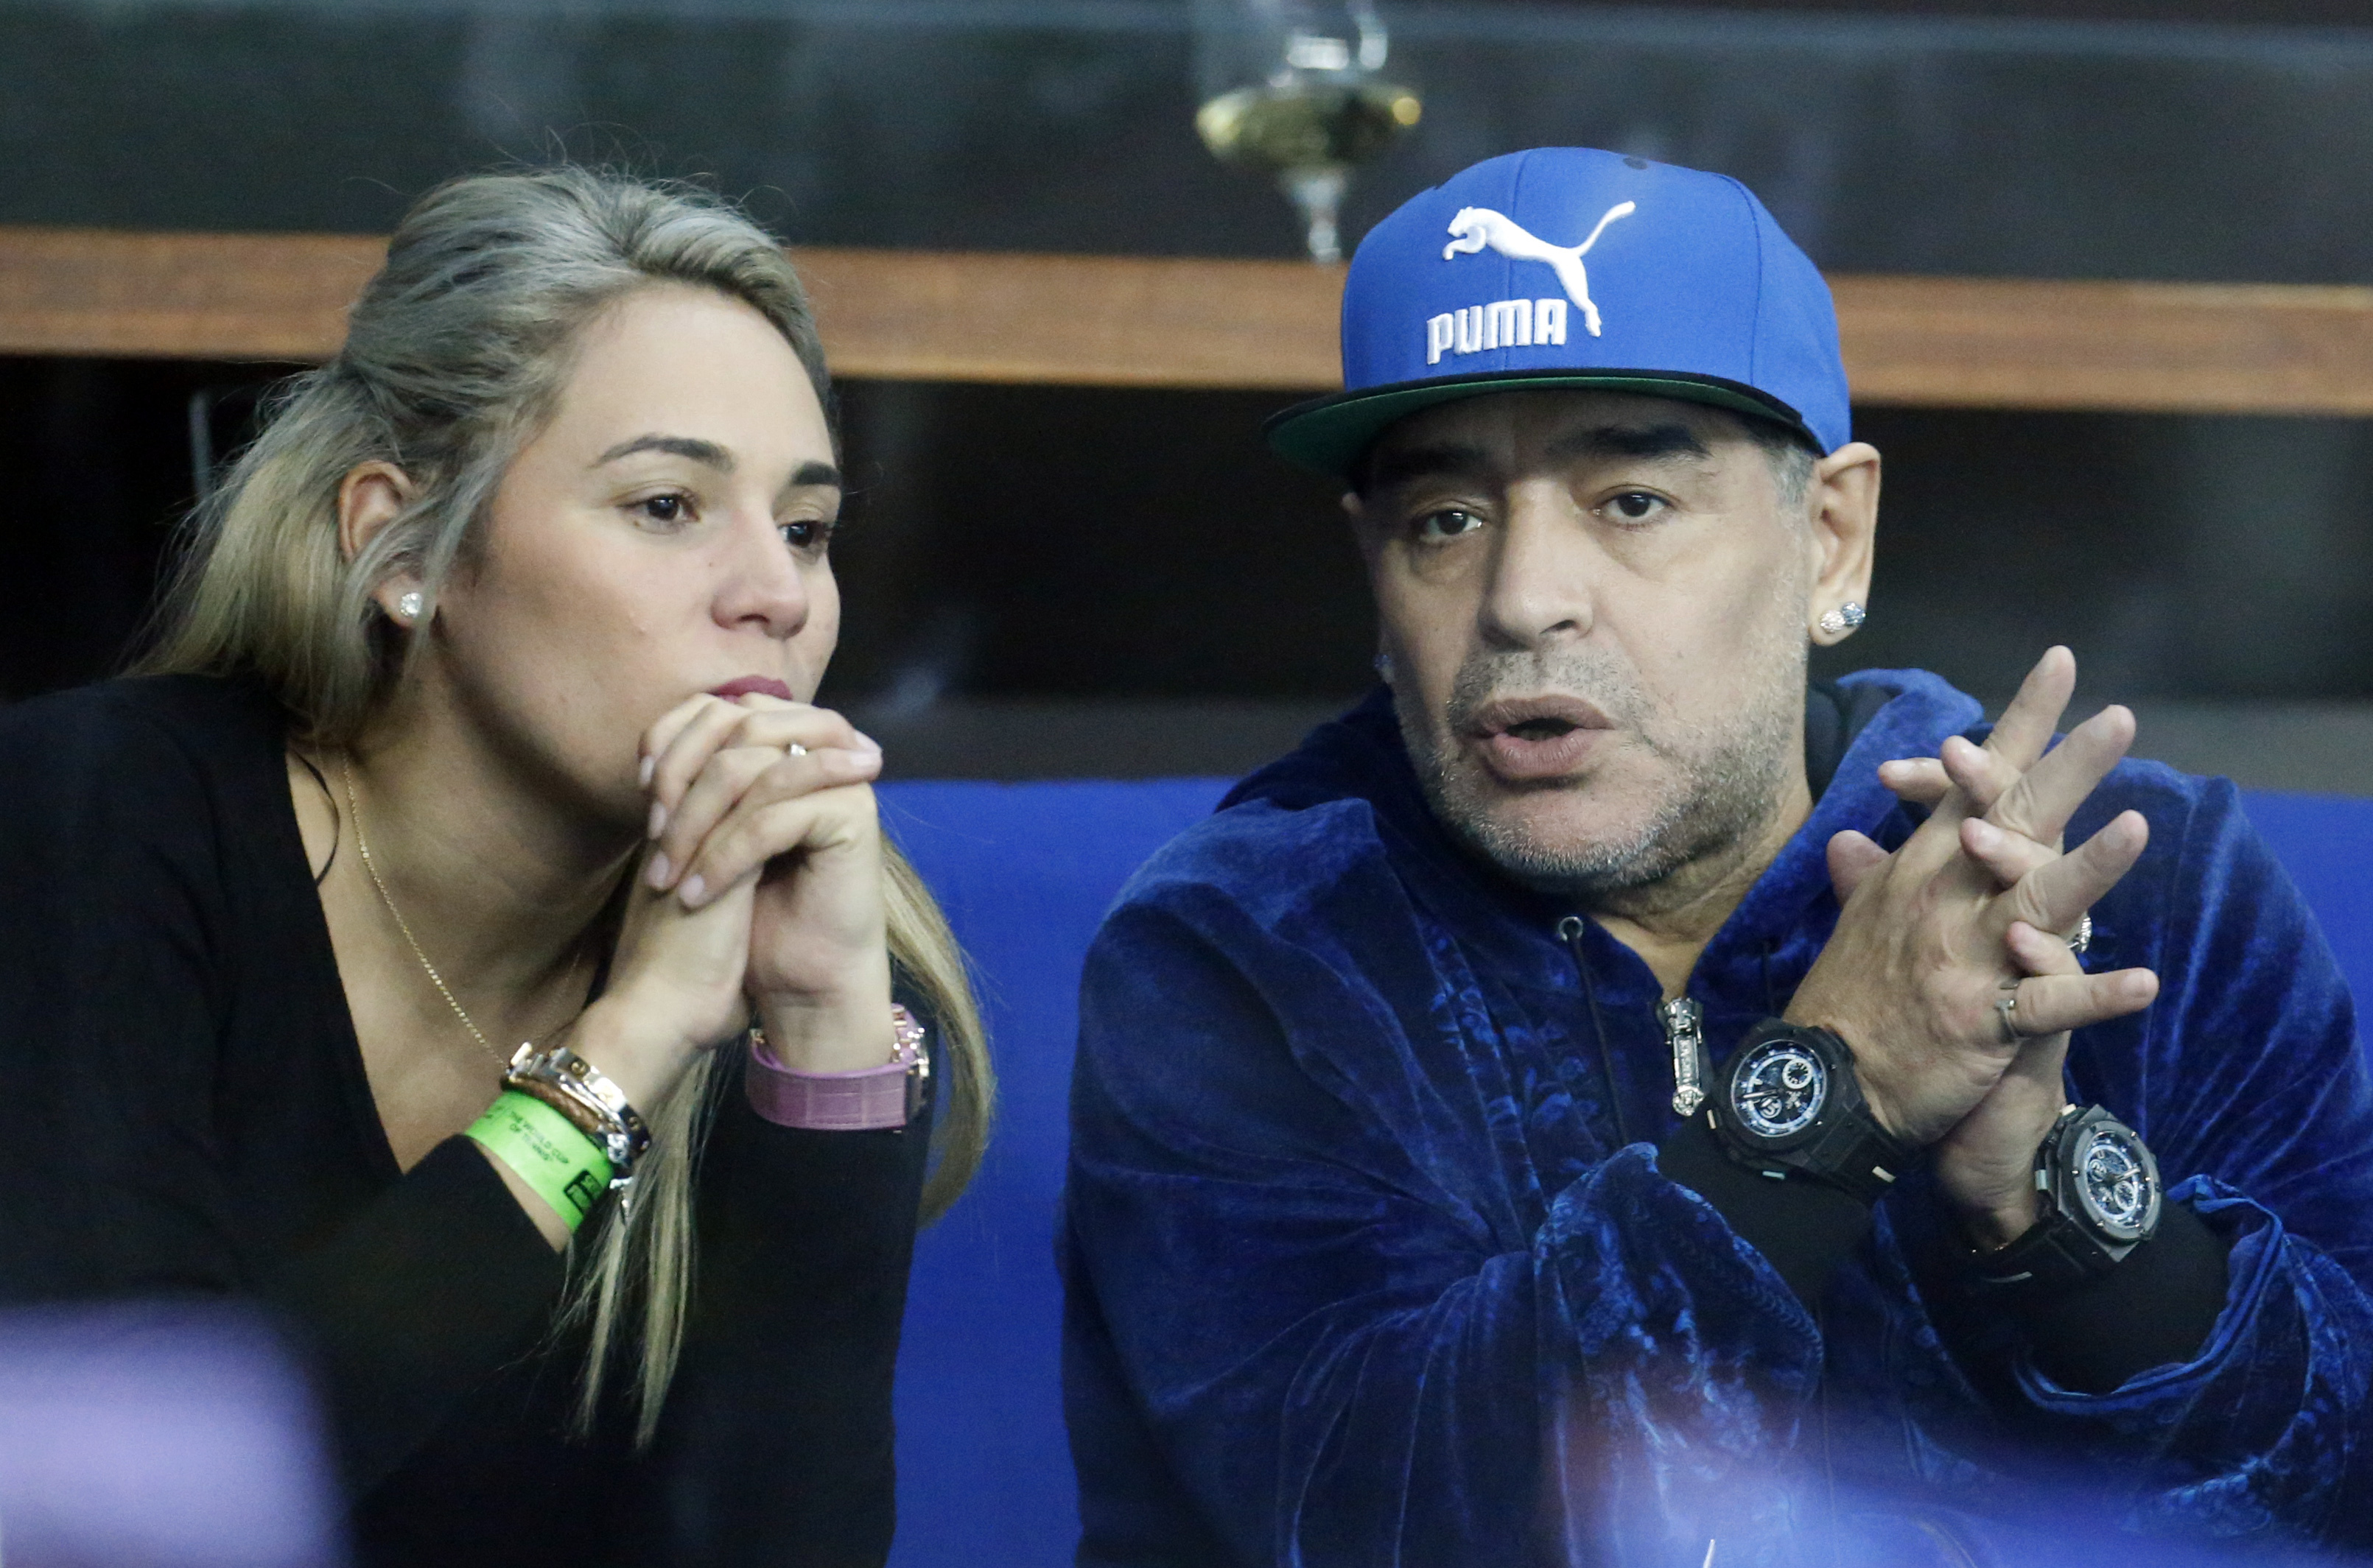 महान फुटबॉलर माराडोना ने गर्लफ्रेंड संग देखा डेविस कप मैच